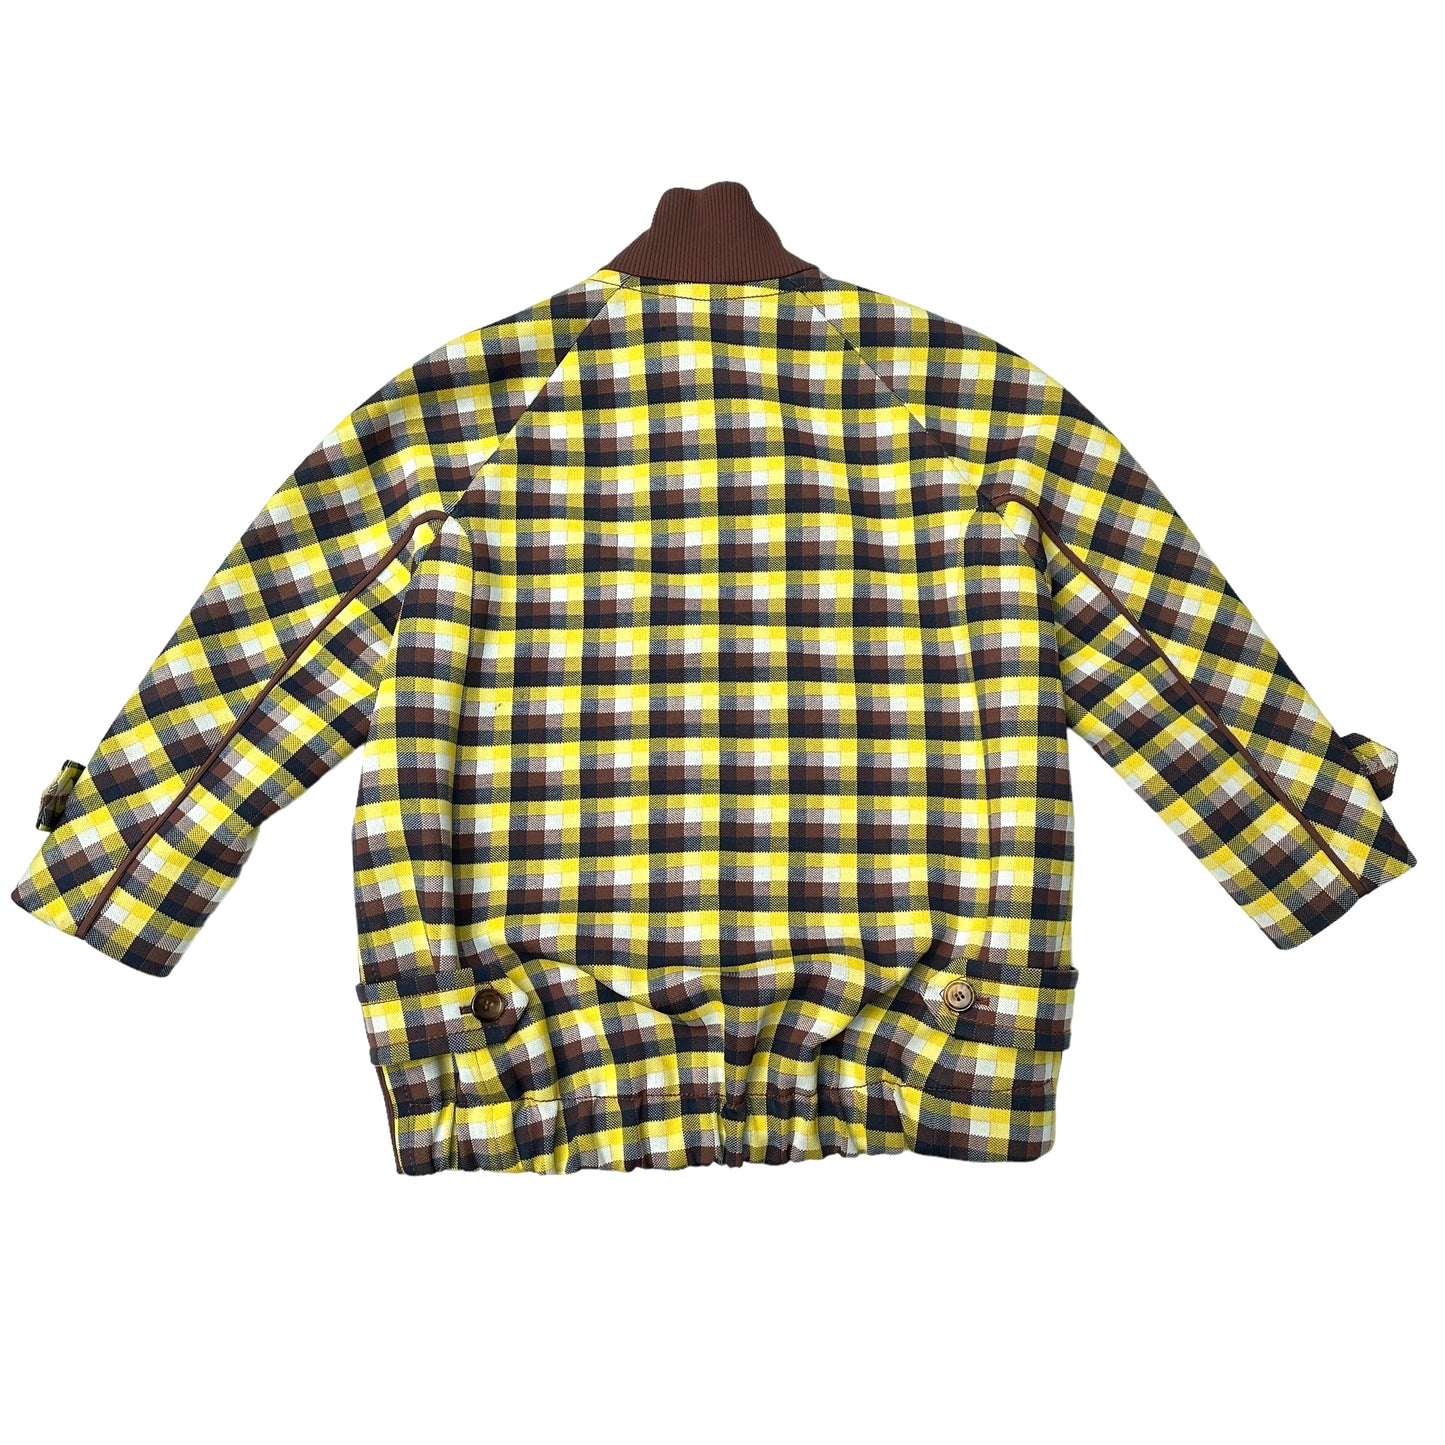 Brown & Yellow Jacket - L